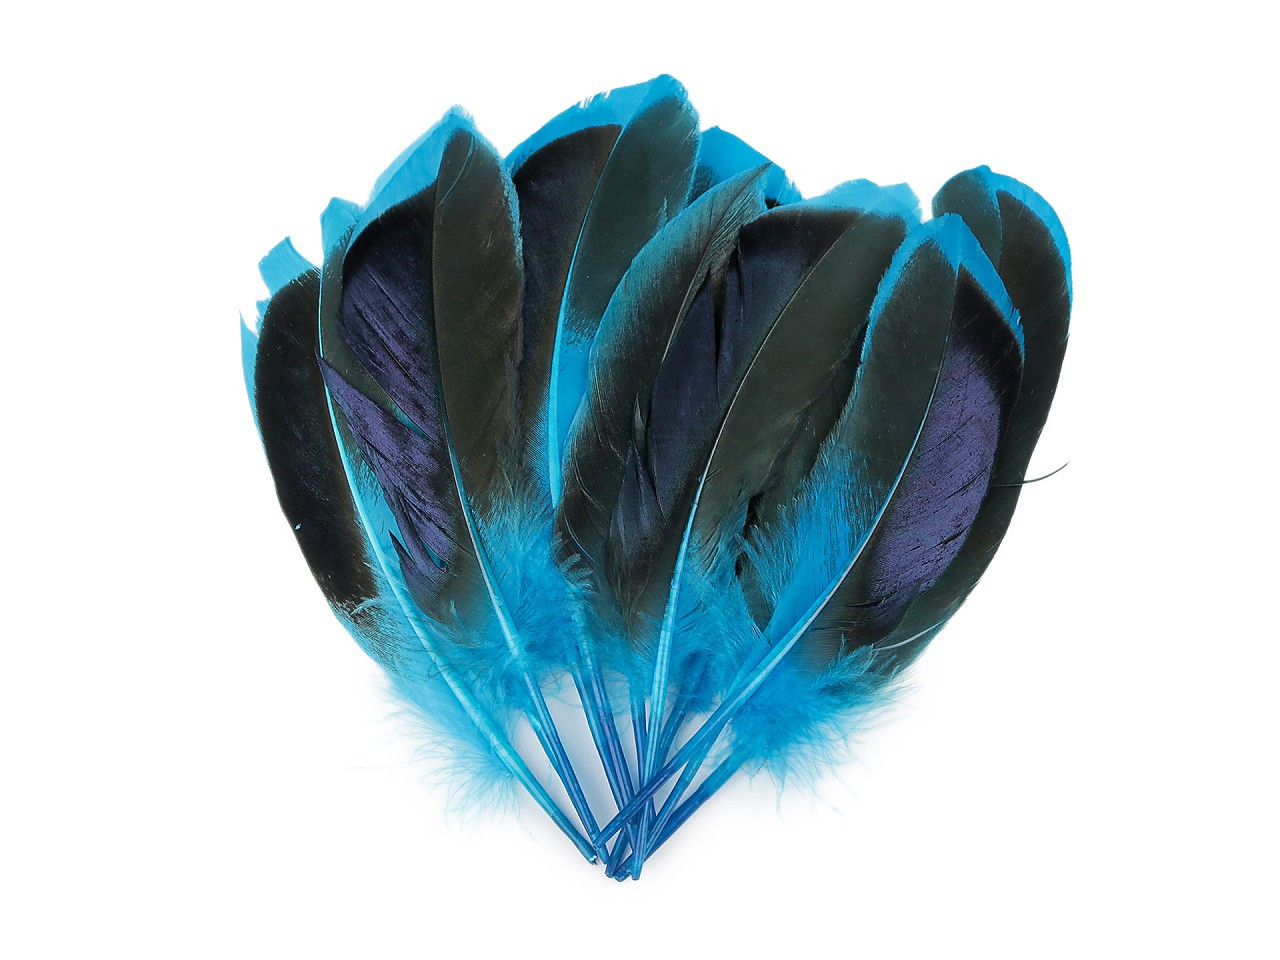 Kachní peří délka 13-15 cm, barva 3 modrá tyrkys